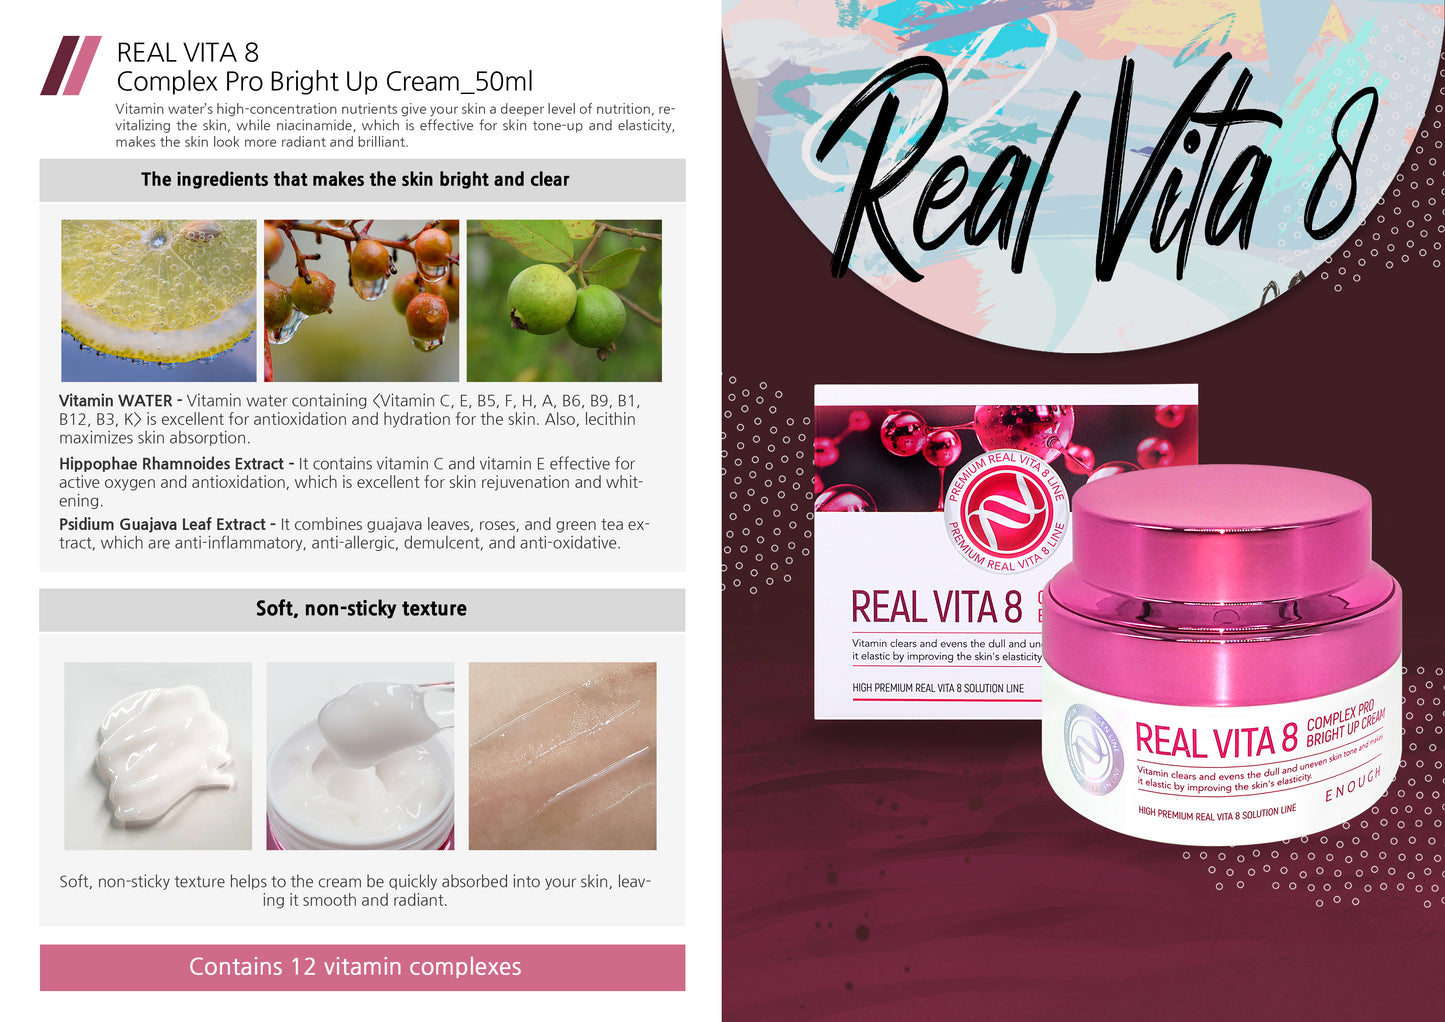 ENOUGH Real Vita 8 Cream (50ml)